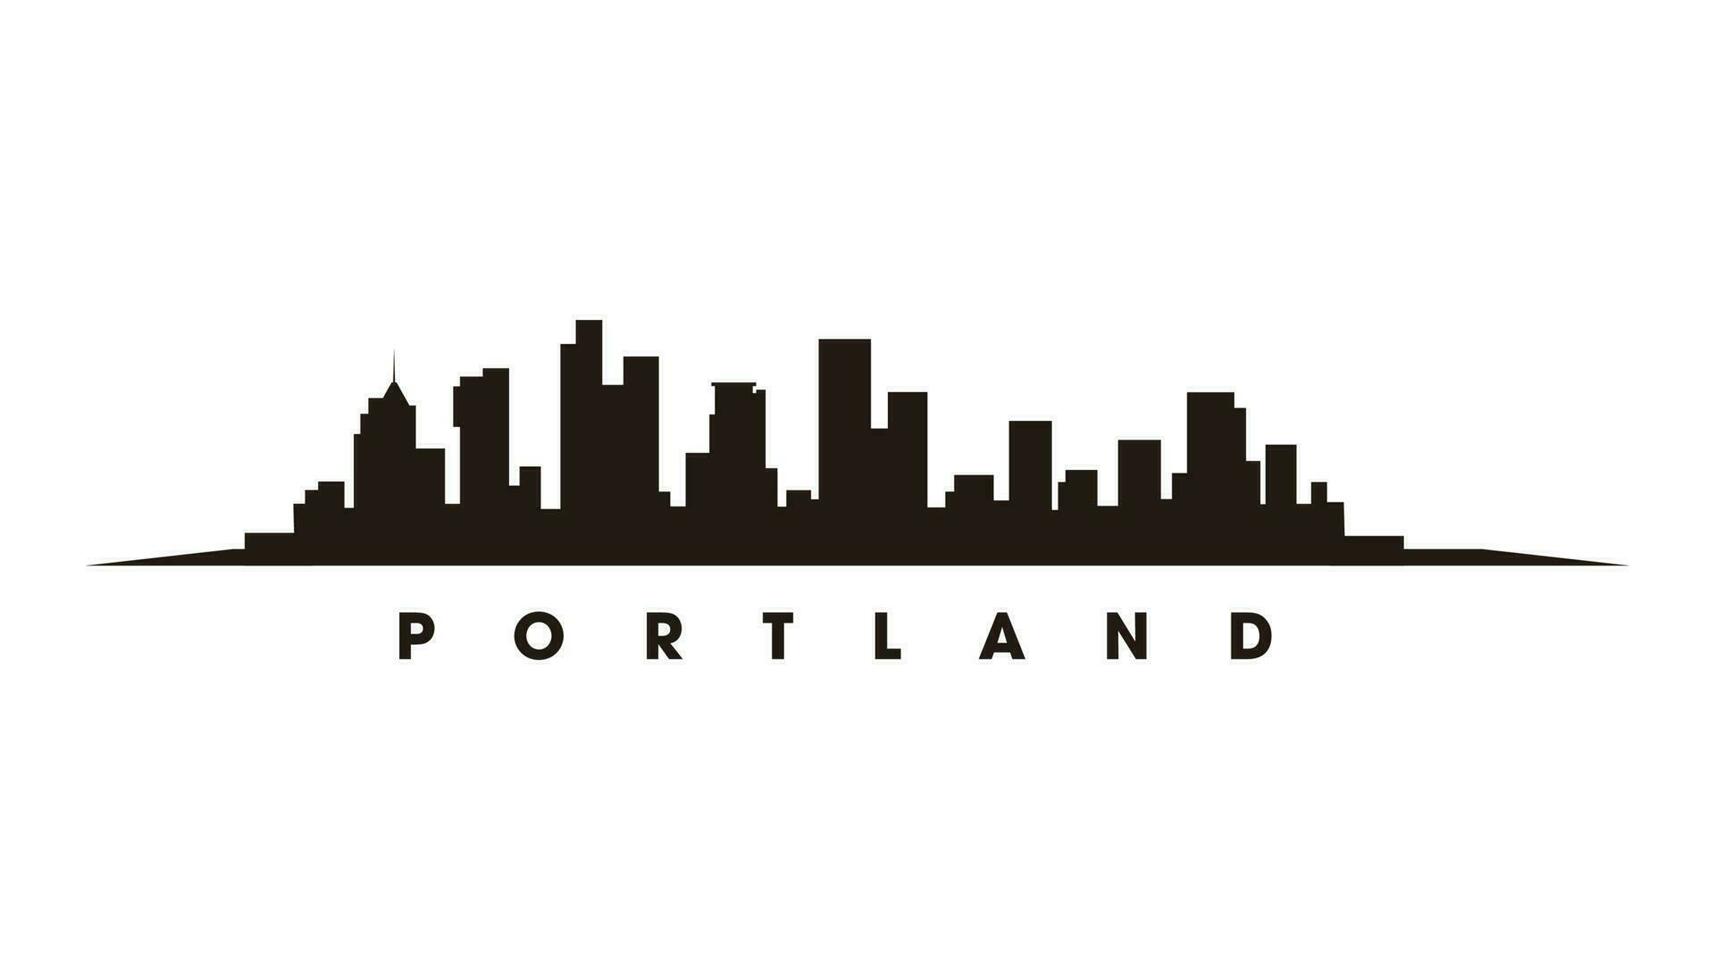 Portland skyline and landmarks silhouette vector